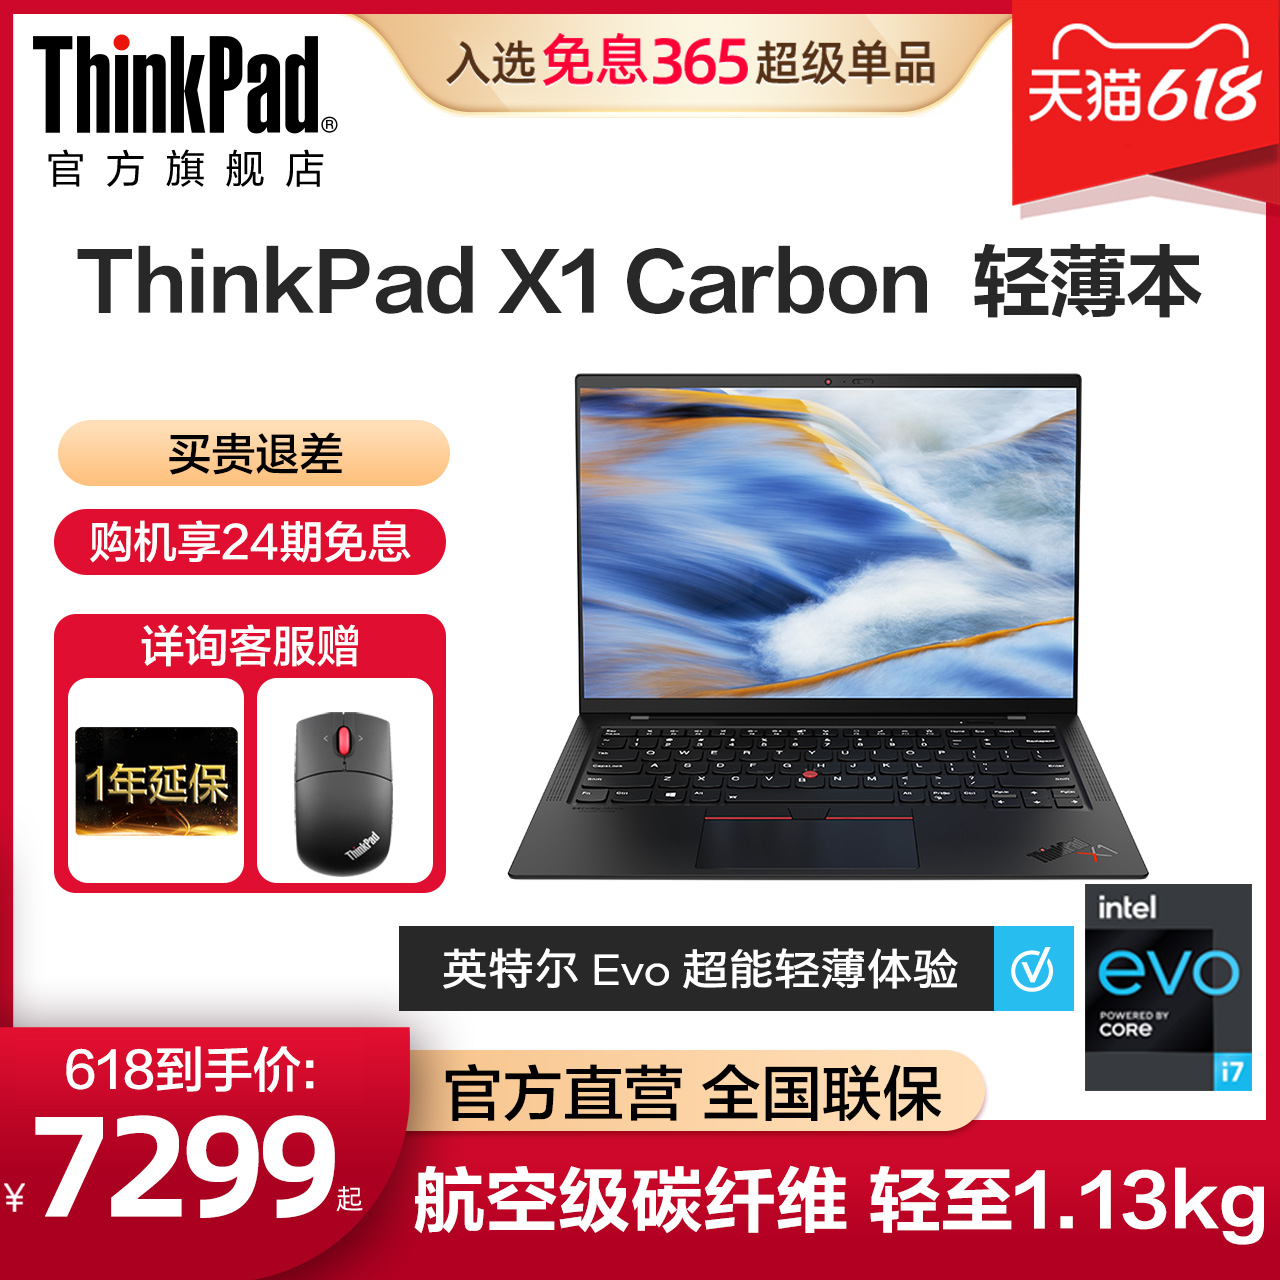 (Bursting recommendation) Lenovo ThinkPad laptops X1 CarbonIntelEvo Cool Rui i5 i7 512G 14 inches Light and thin Business T